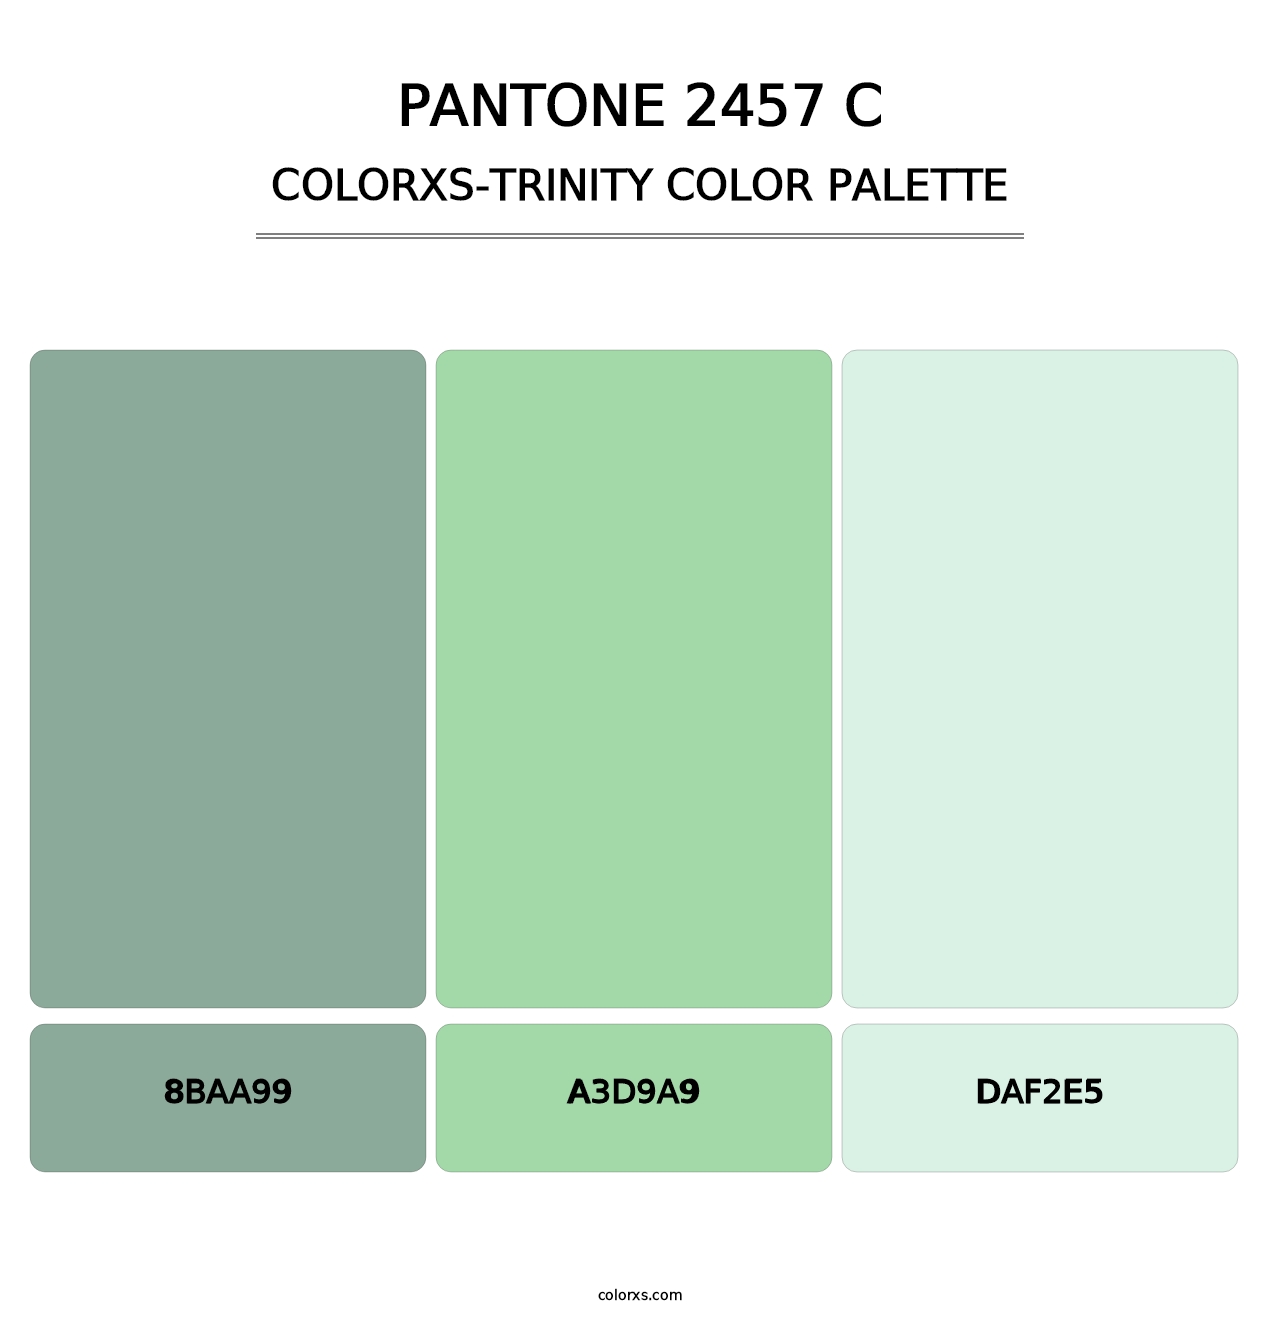 PANTONE 2457 C - Colorxs Trinity Palette